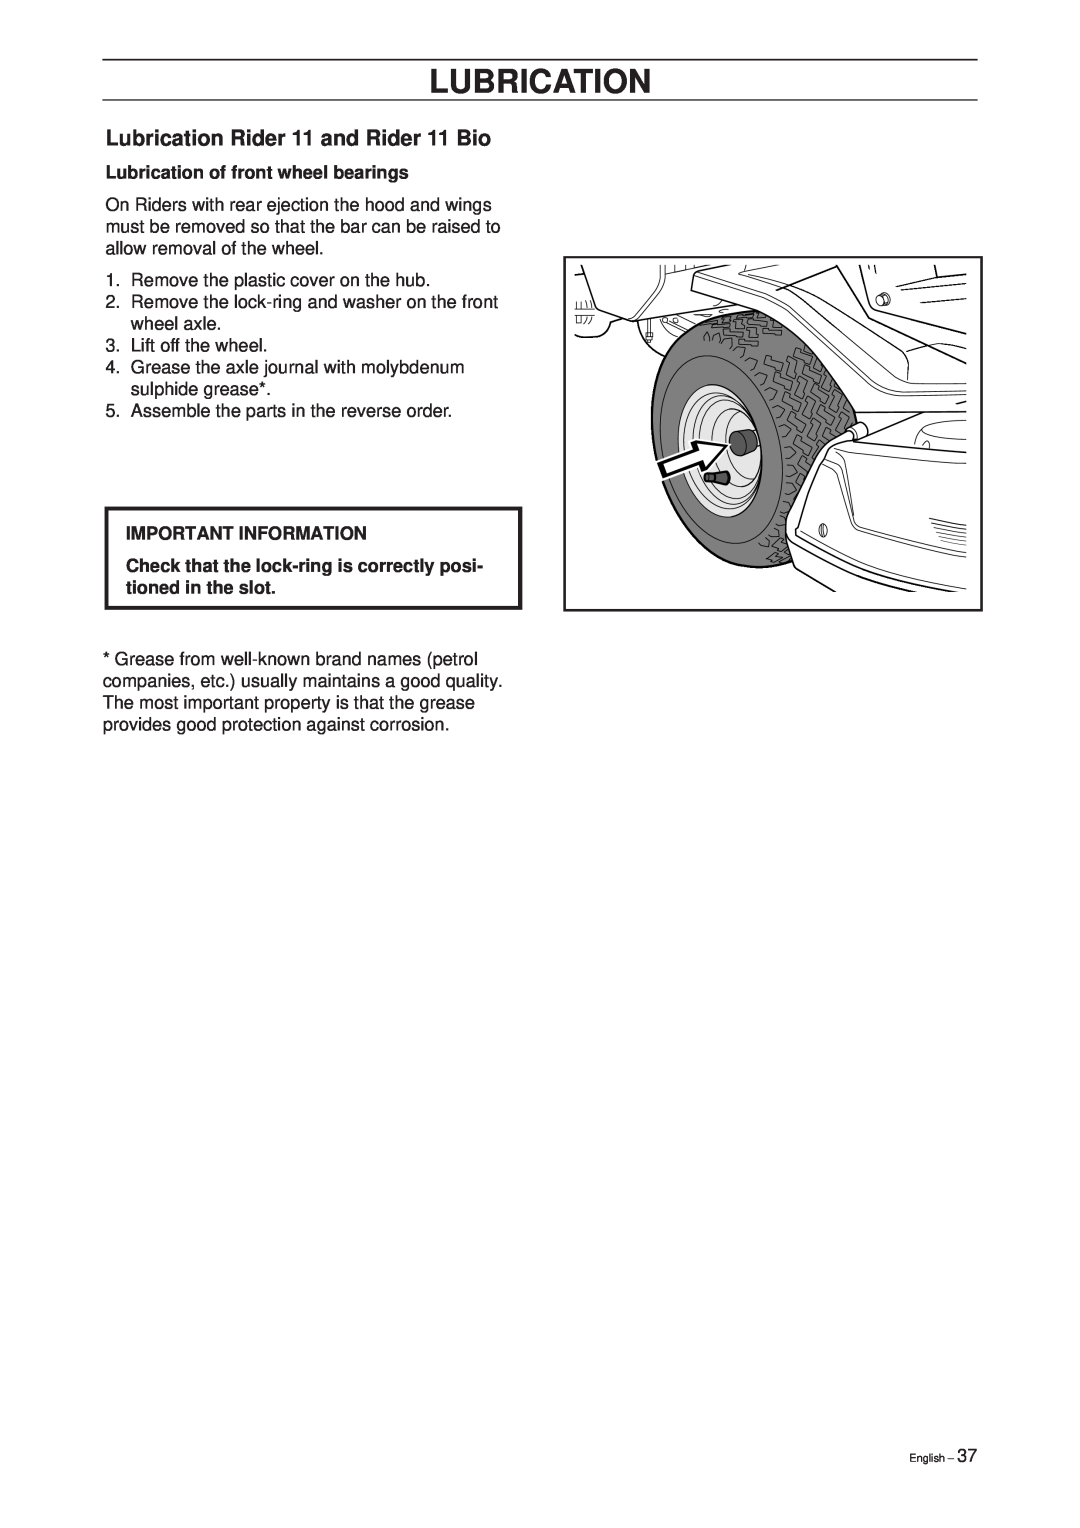 Husqvarna 39765 manual Lubrication Rider 11 and Rider 11 Bio, Lubrication of front wheel bearings, Important Information 